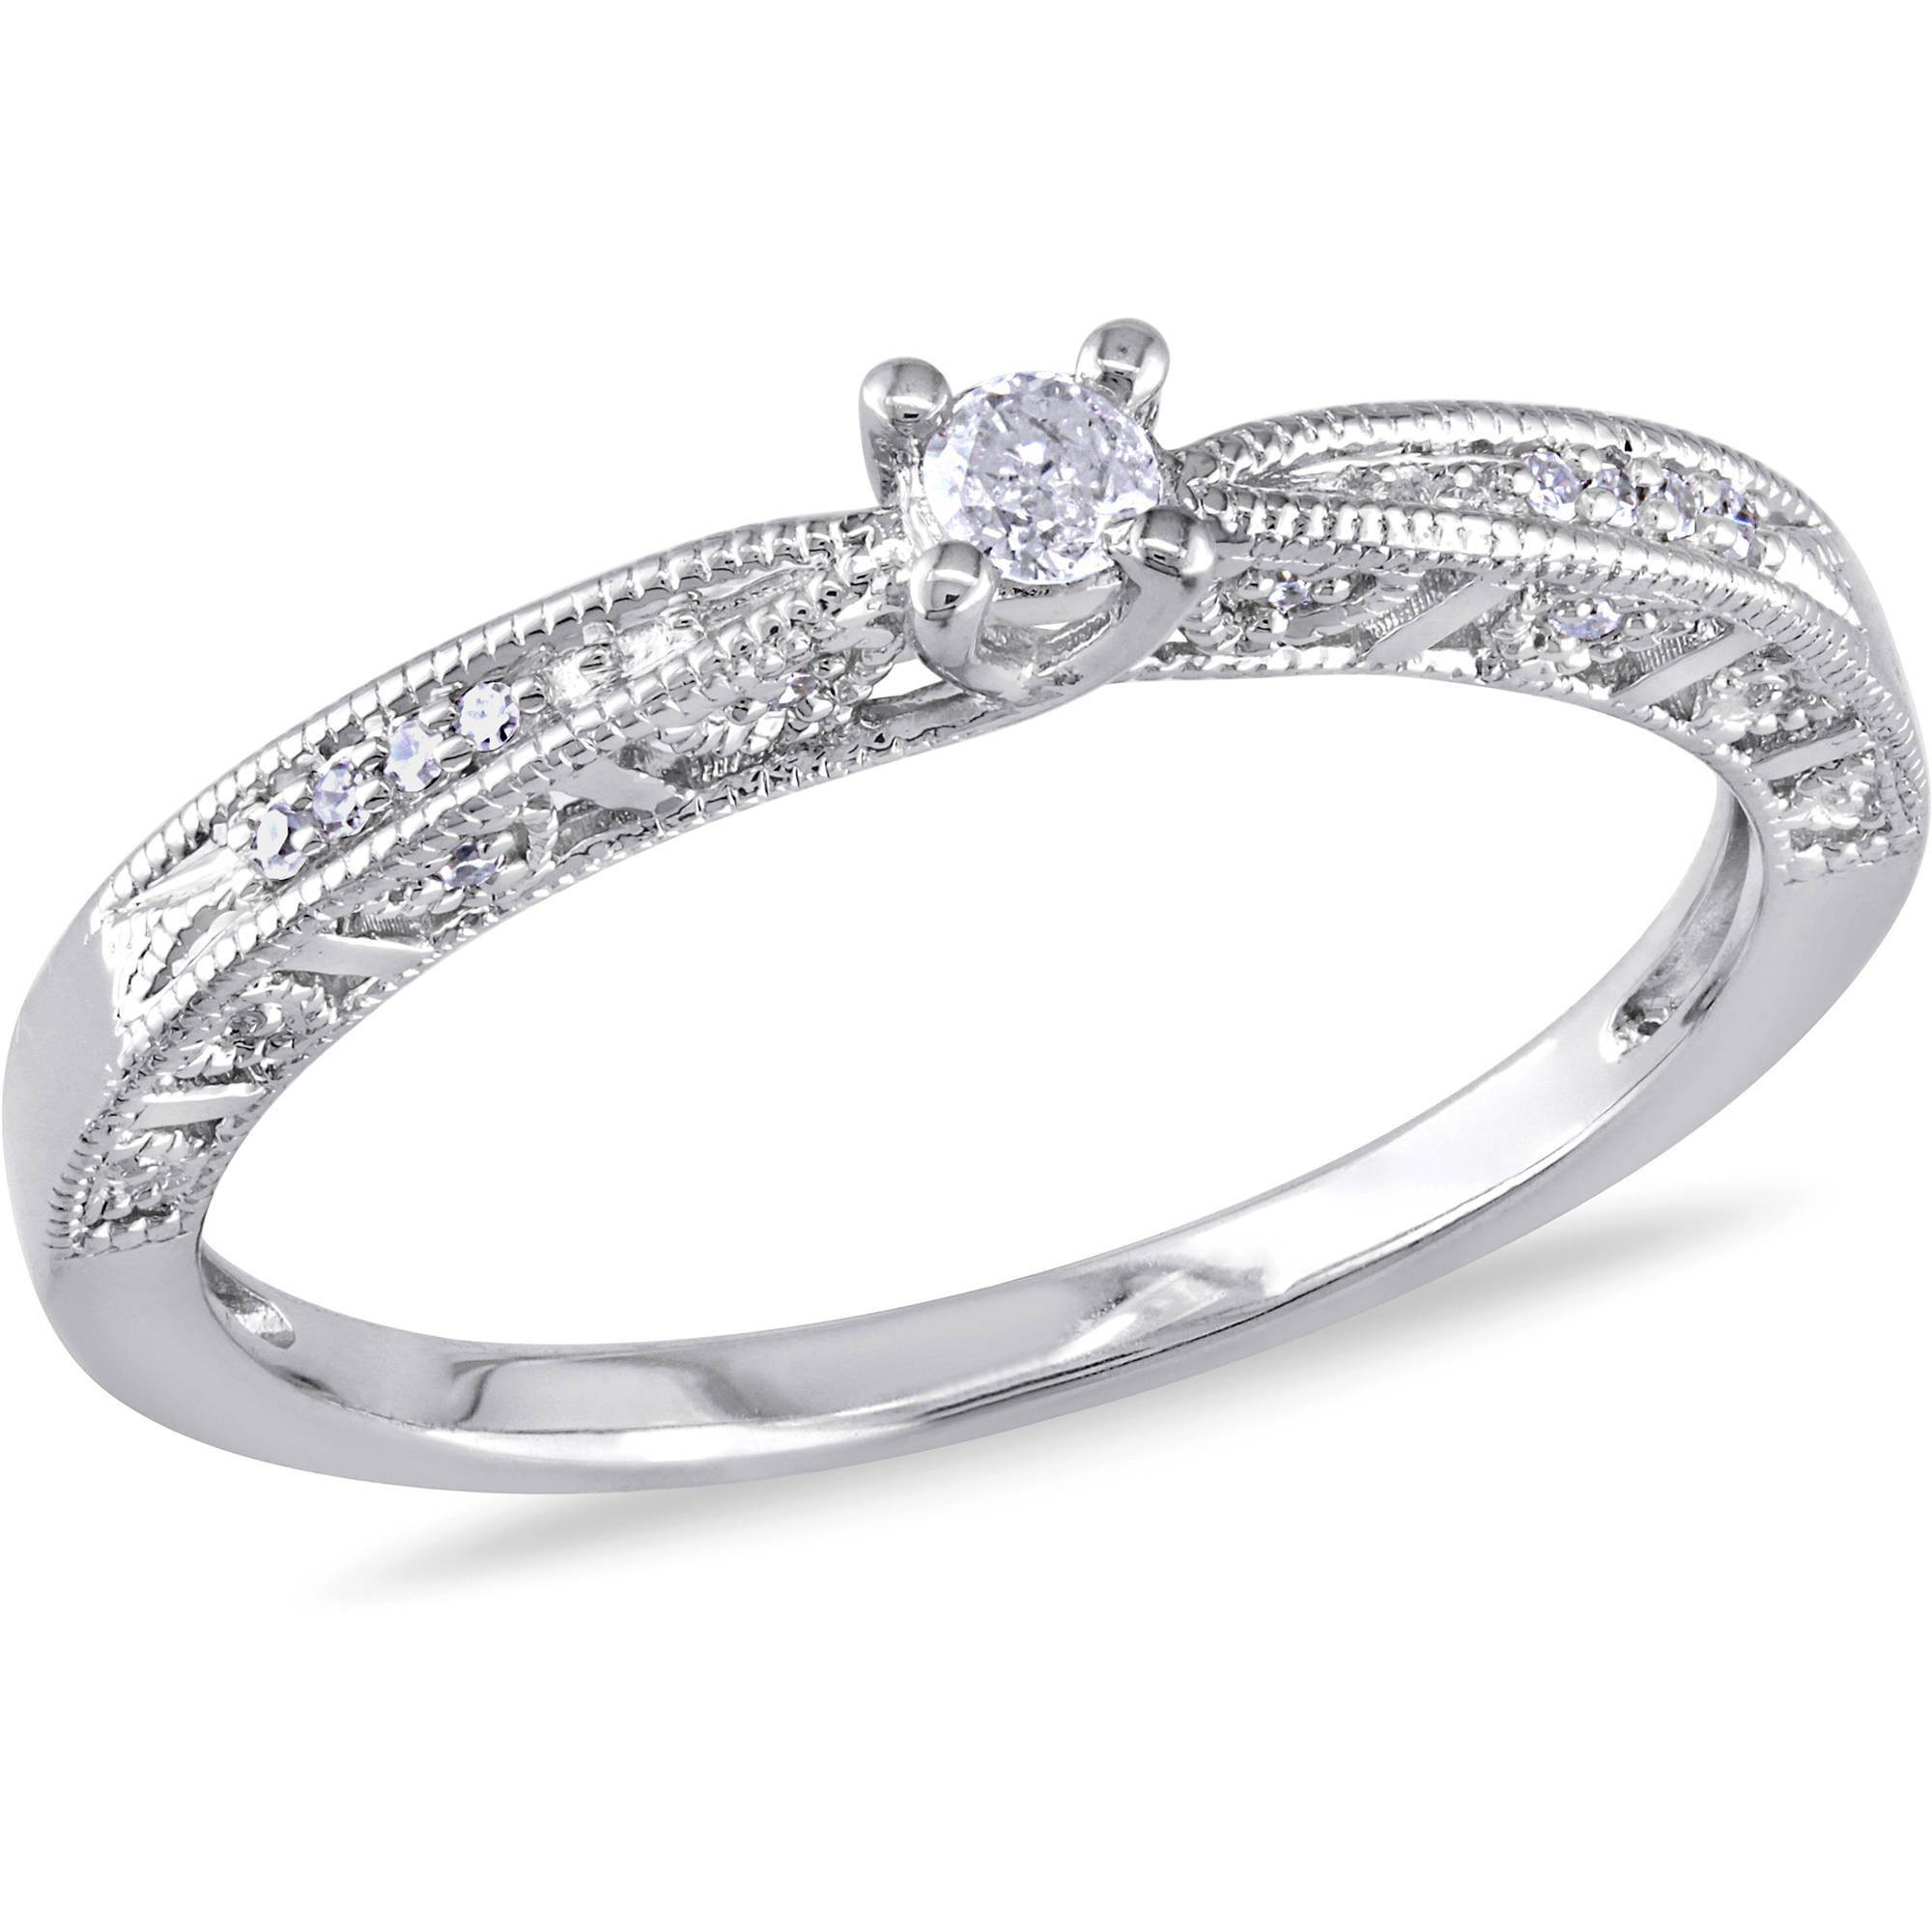 Diamond Rings At Walmart
 15 Inspirations of Walmart Engagement Rings